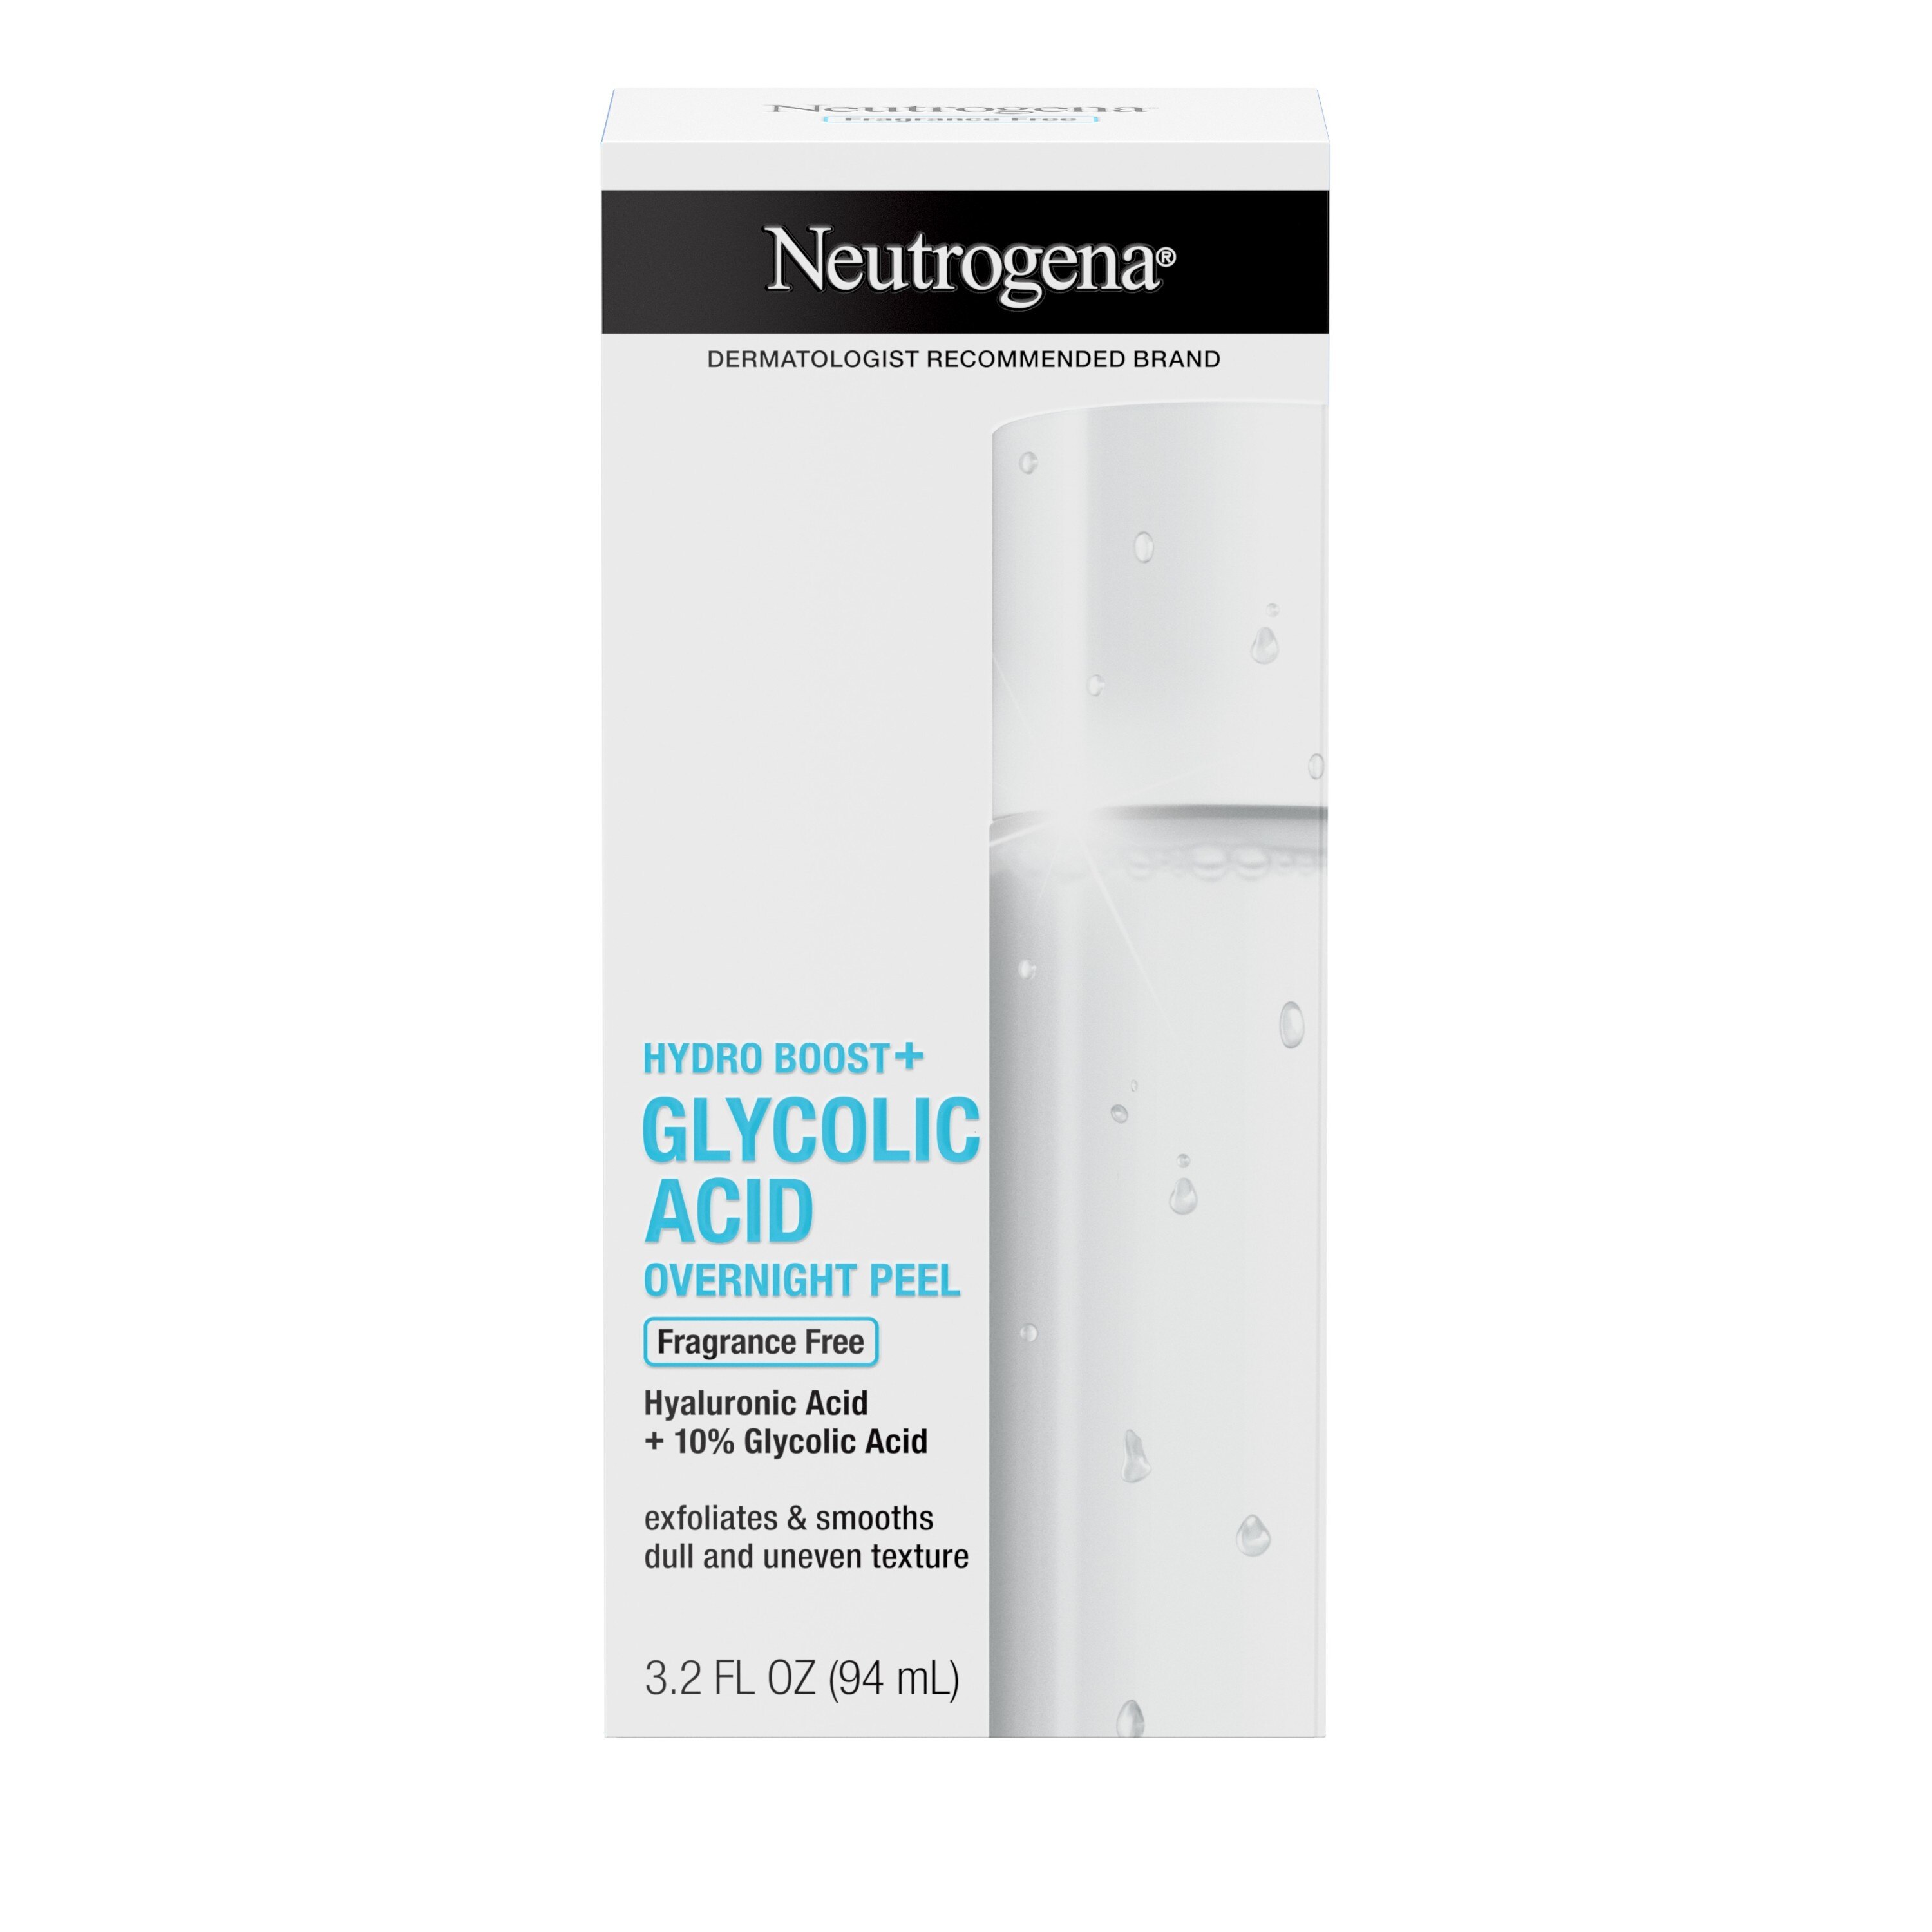 Neutrogena Hydro Boost+ Glycolic Acid Overnight Face Peel, 3.2 OZ